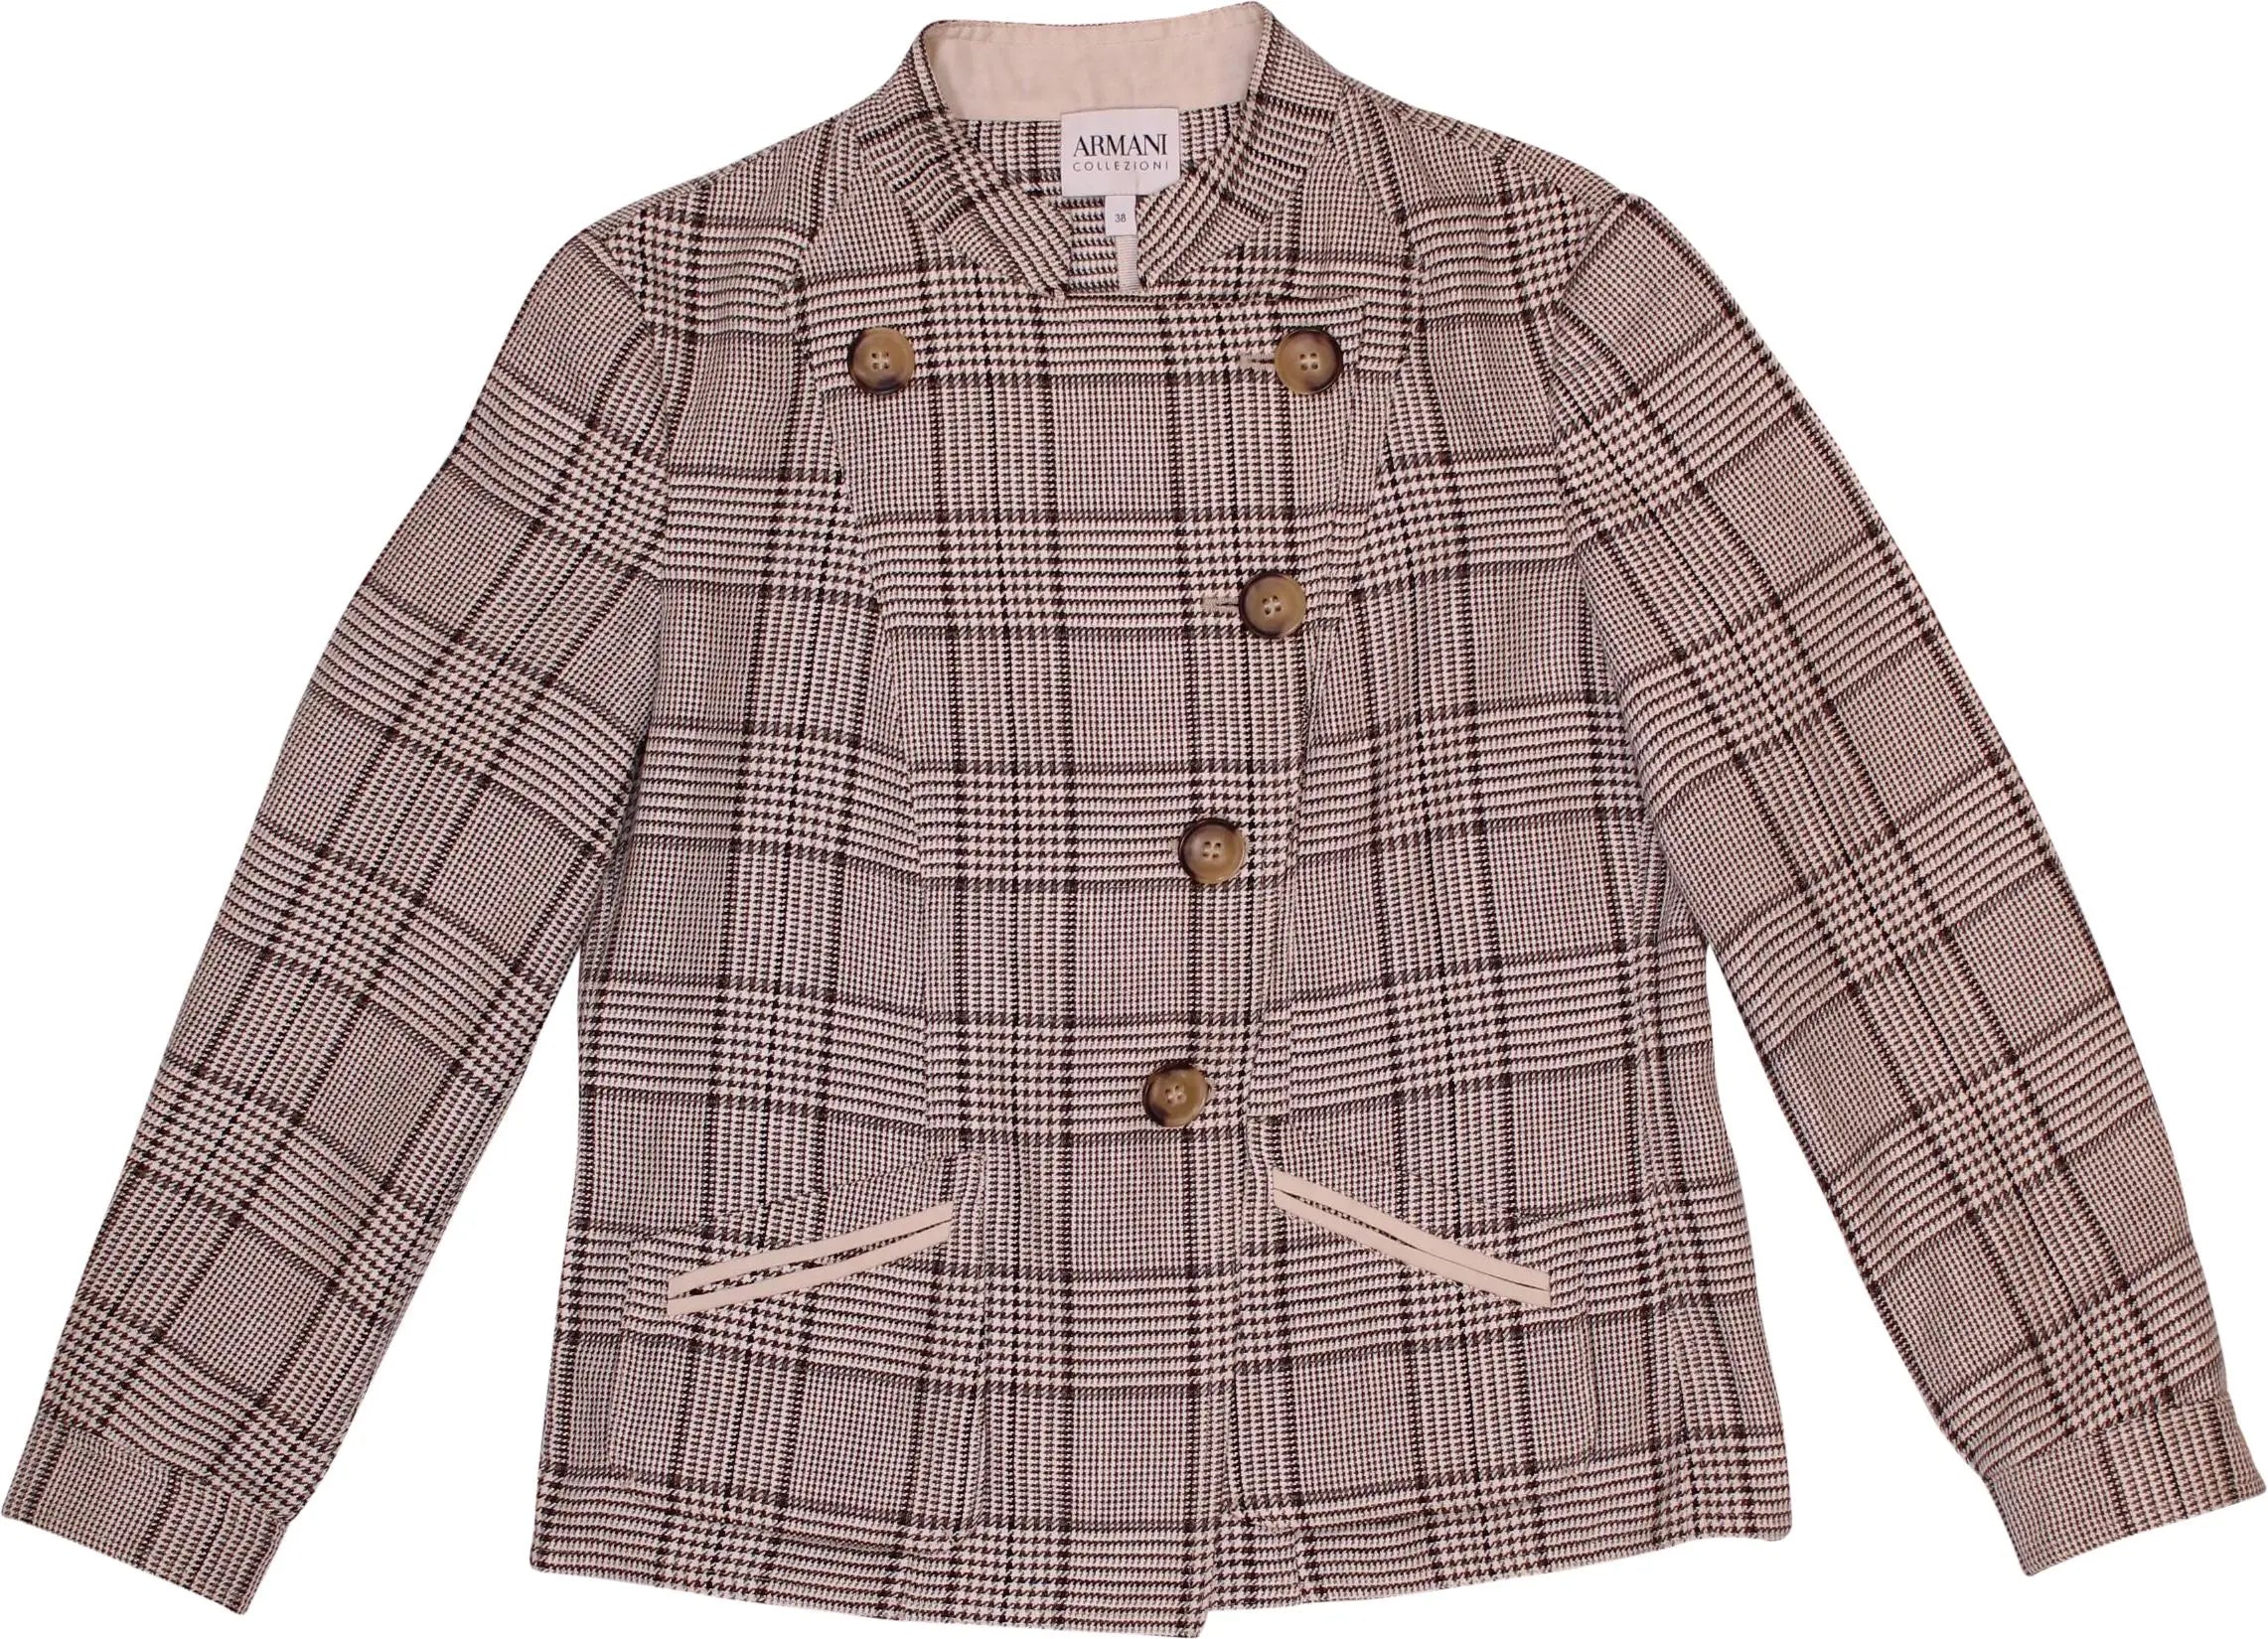 Armani Collezioni - Checked Blazer by Armani Collezioni- ThriftTale.com - Vintage and second handclothing